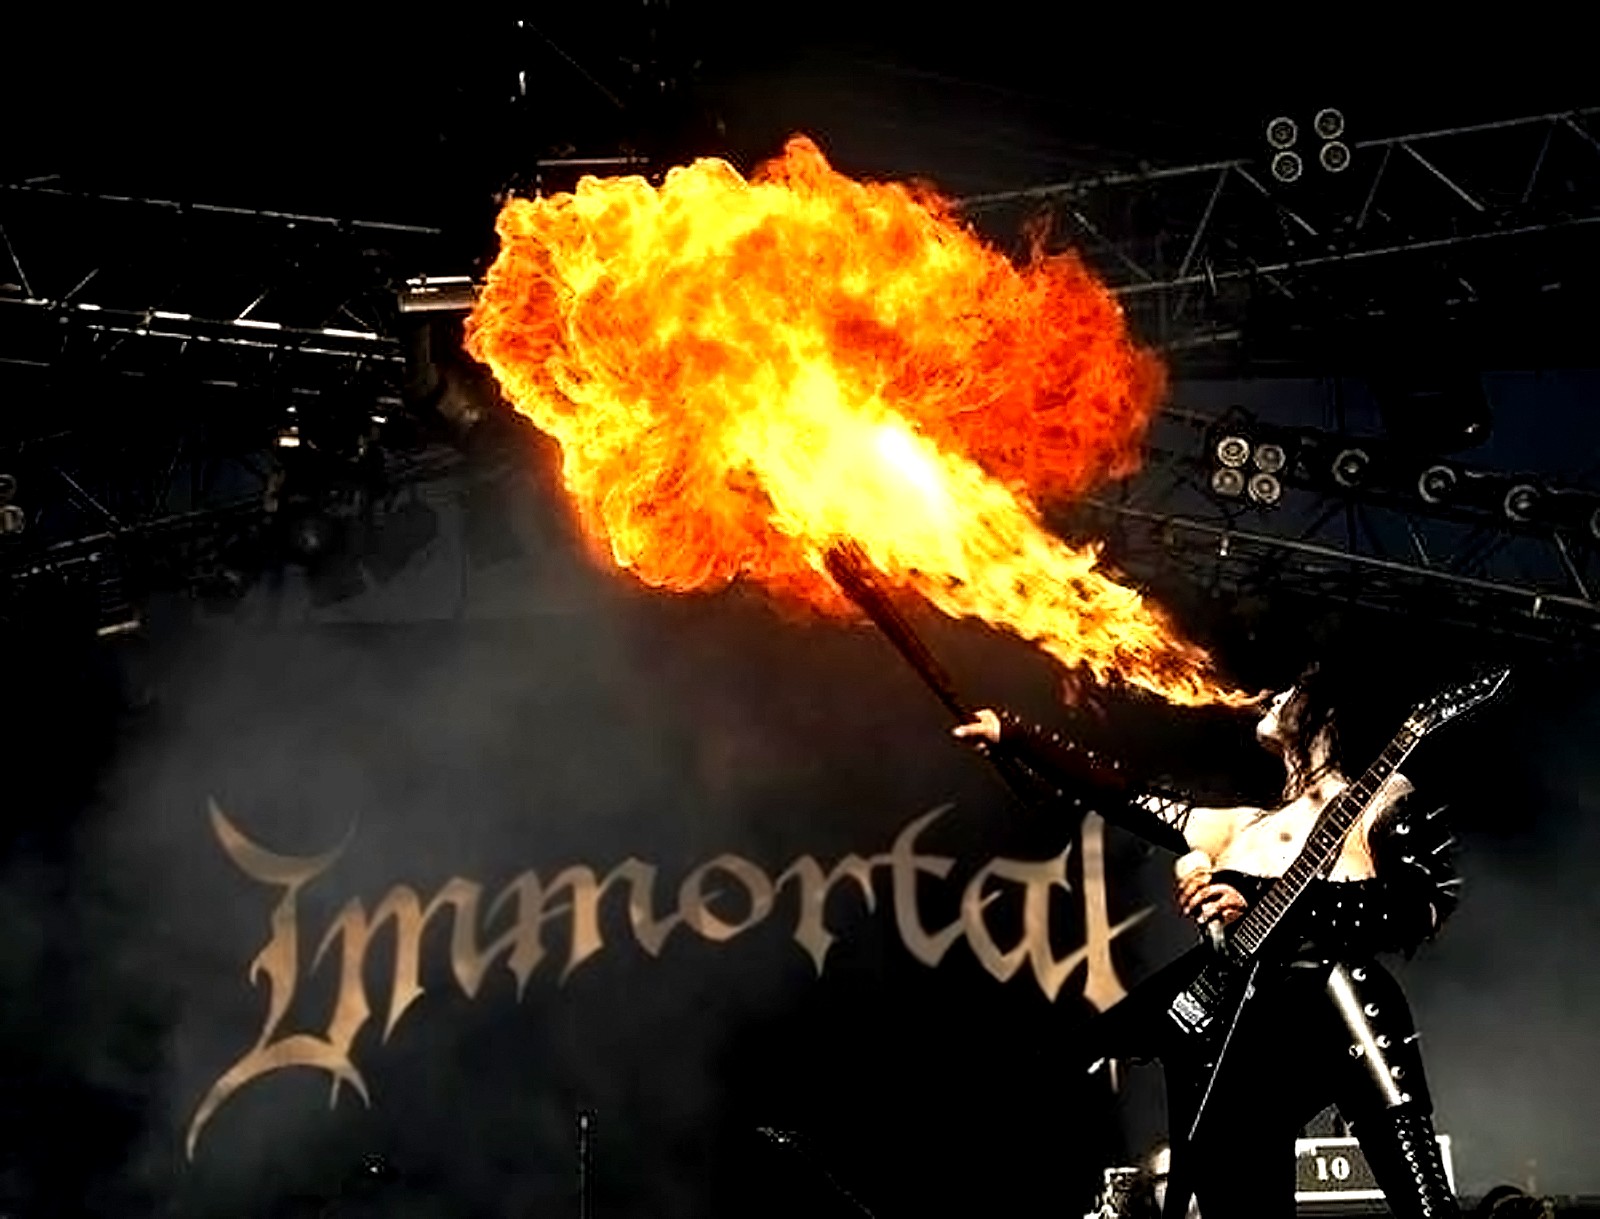 immortal, Black, Metal, Heavy, Groups, Bands, Hard, Rock, Concerts, Guitars, Fire, Flames Wallpaper